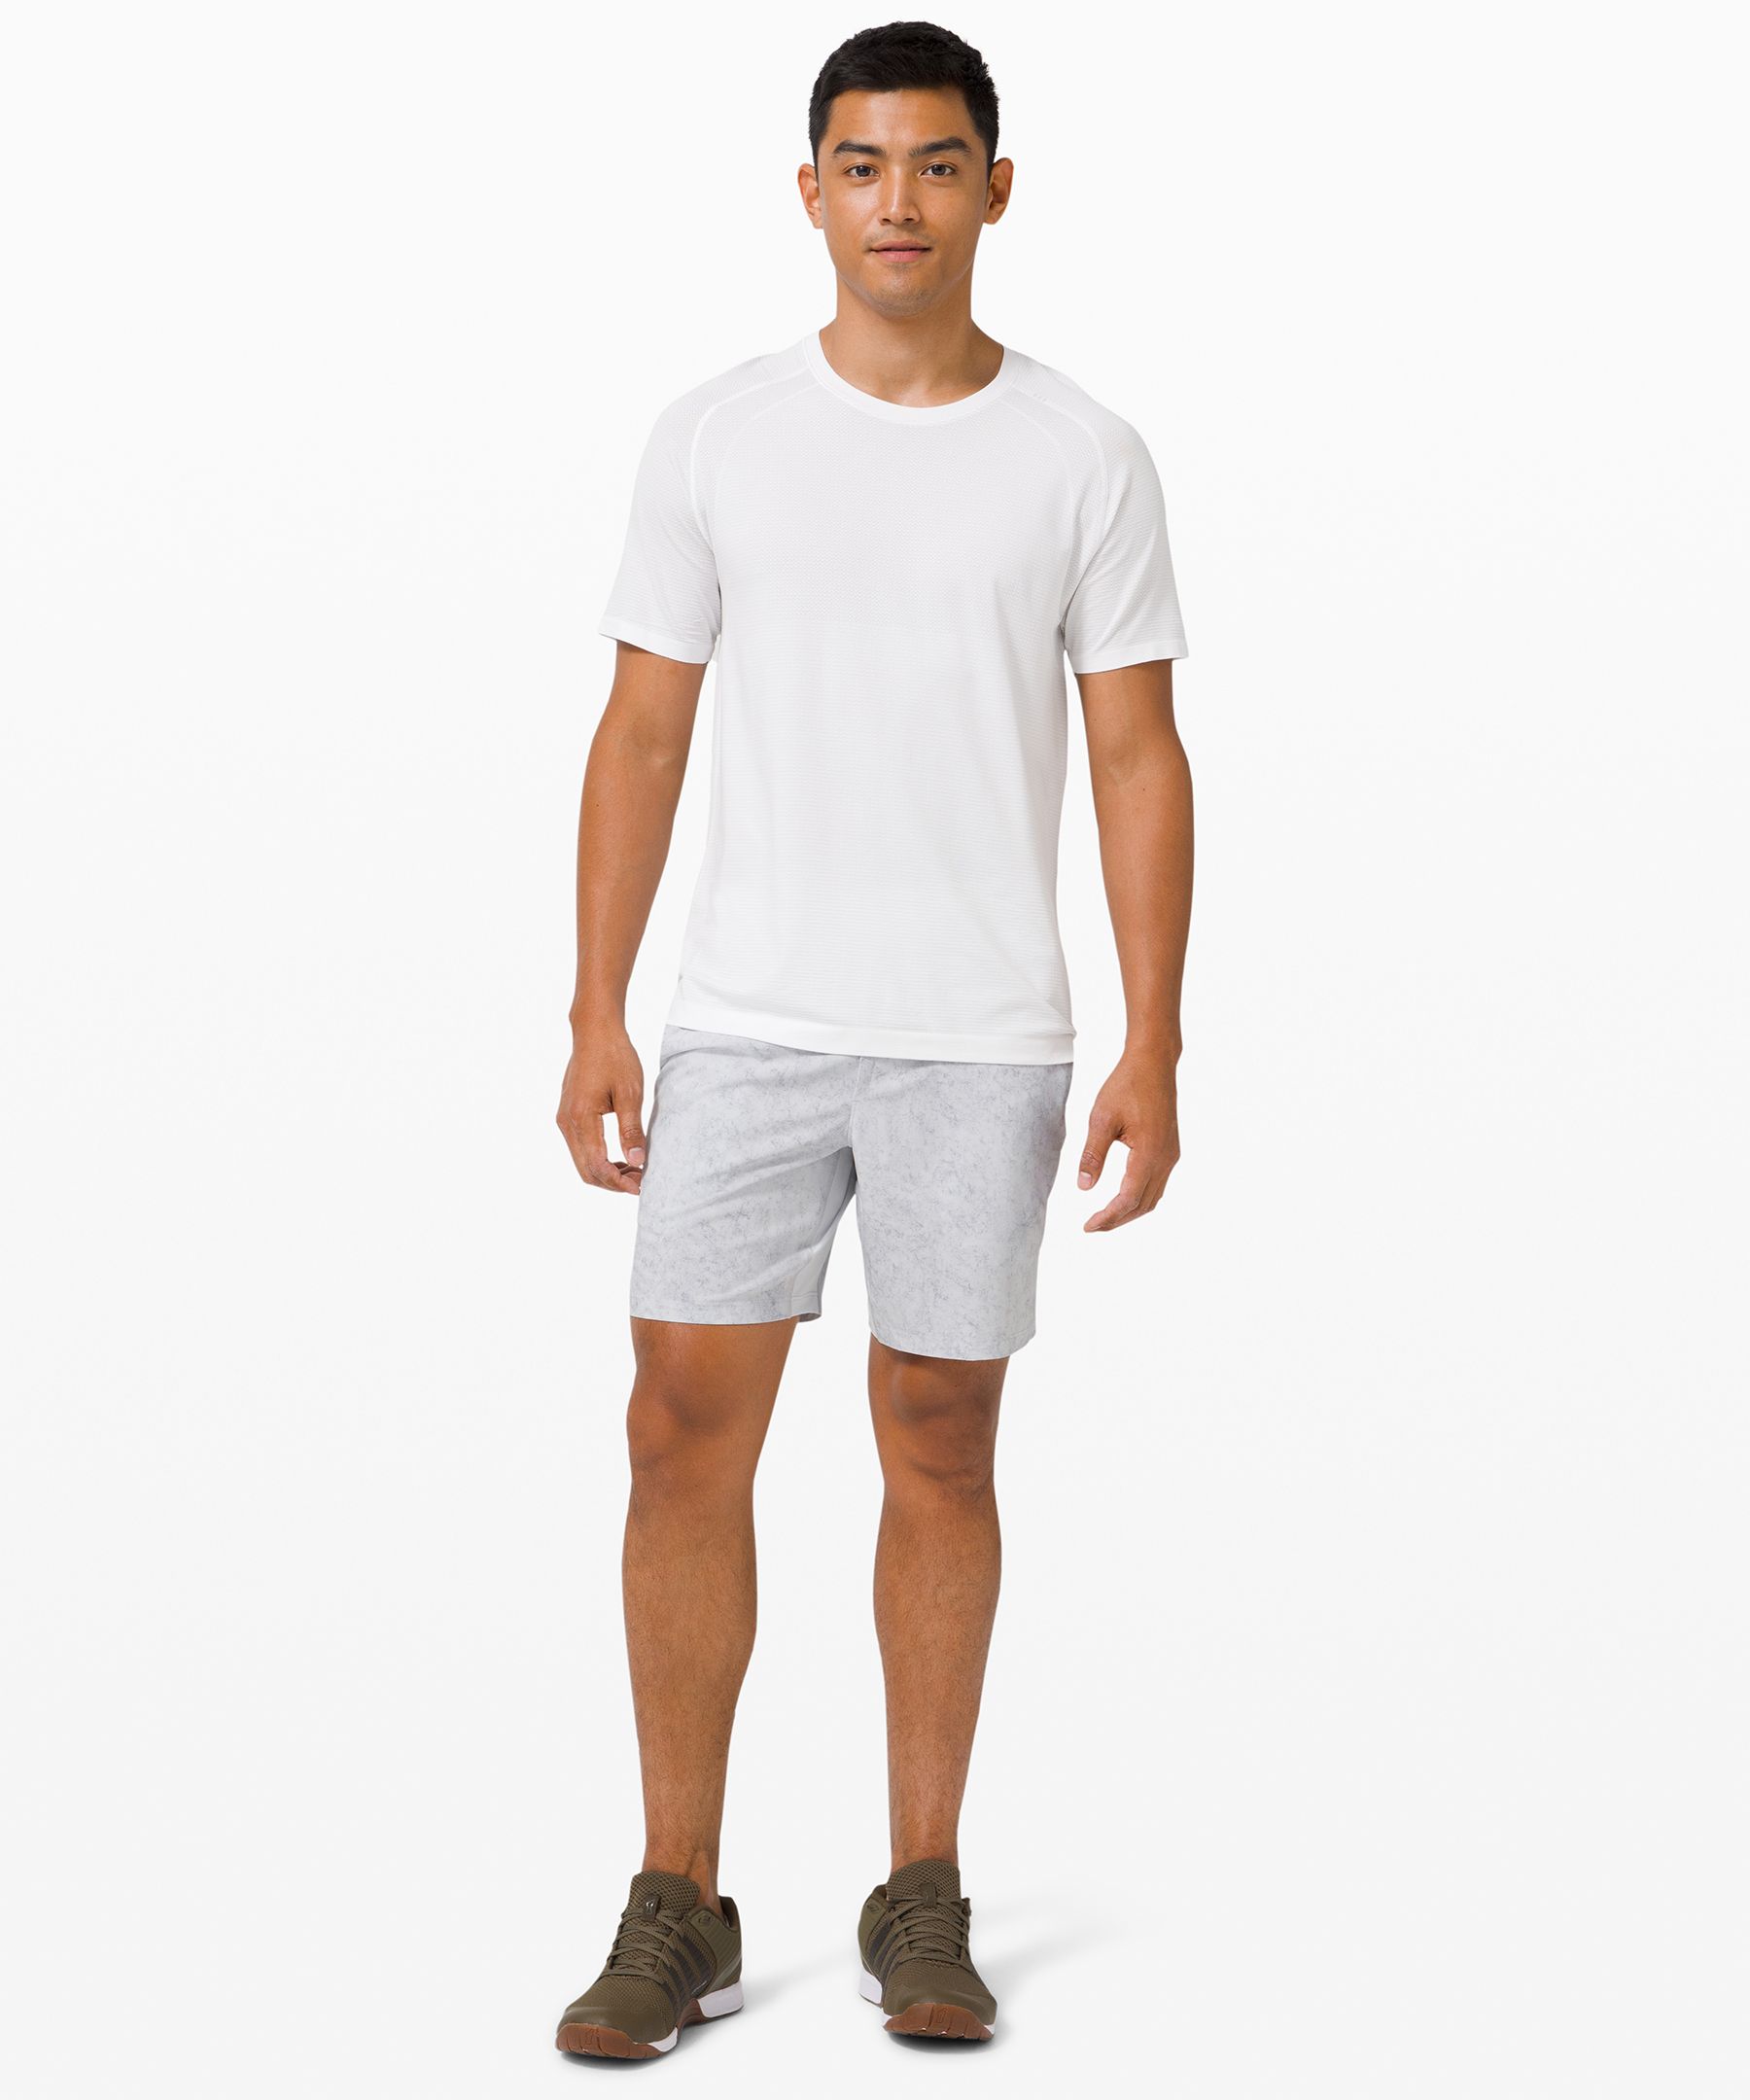 mens white lululemon shorts